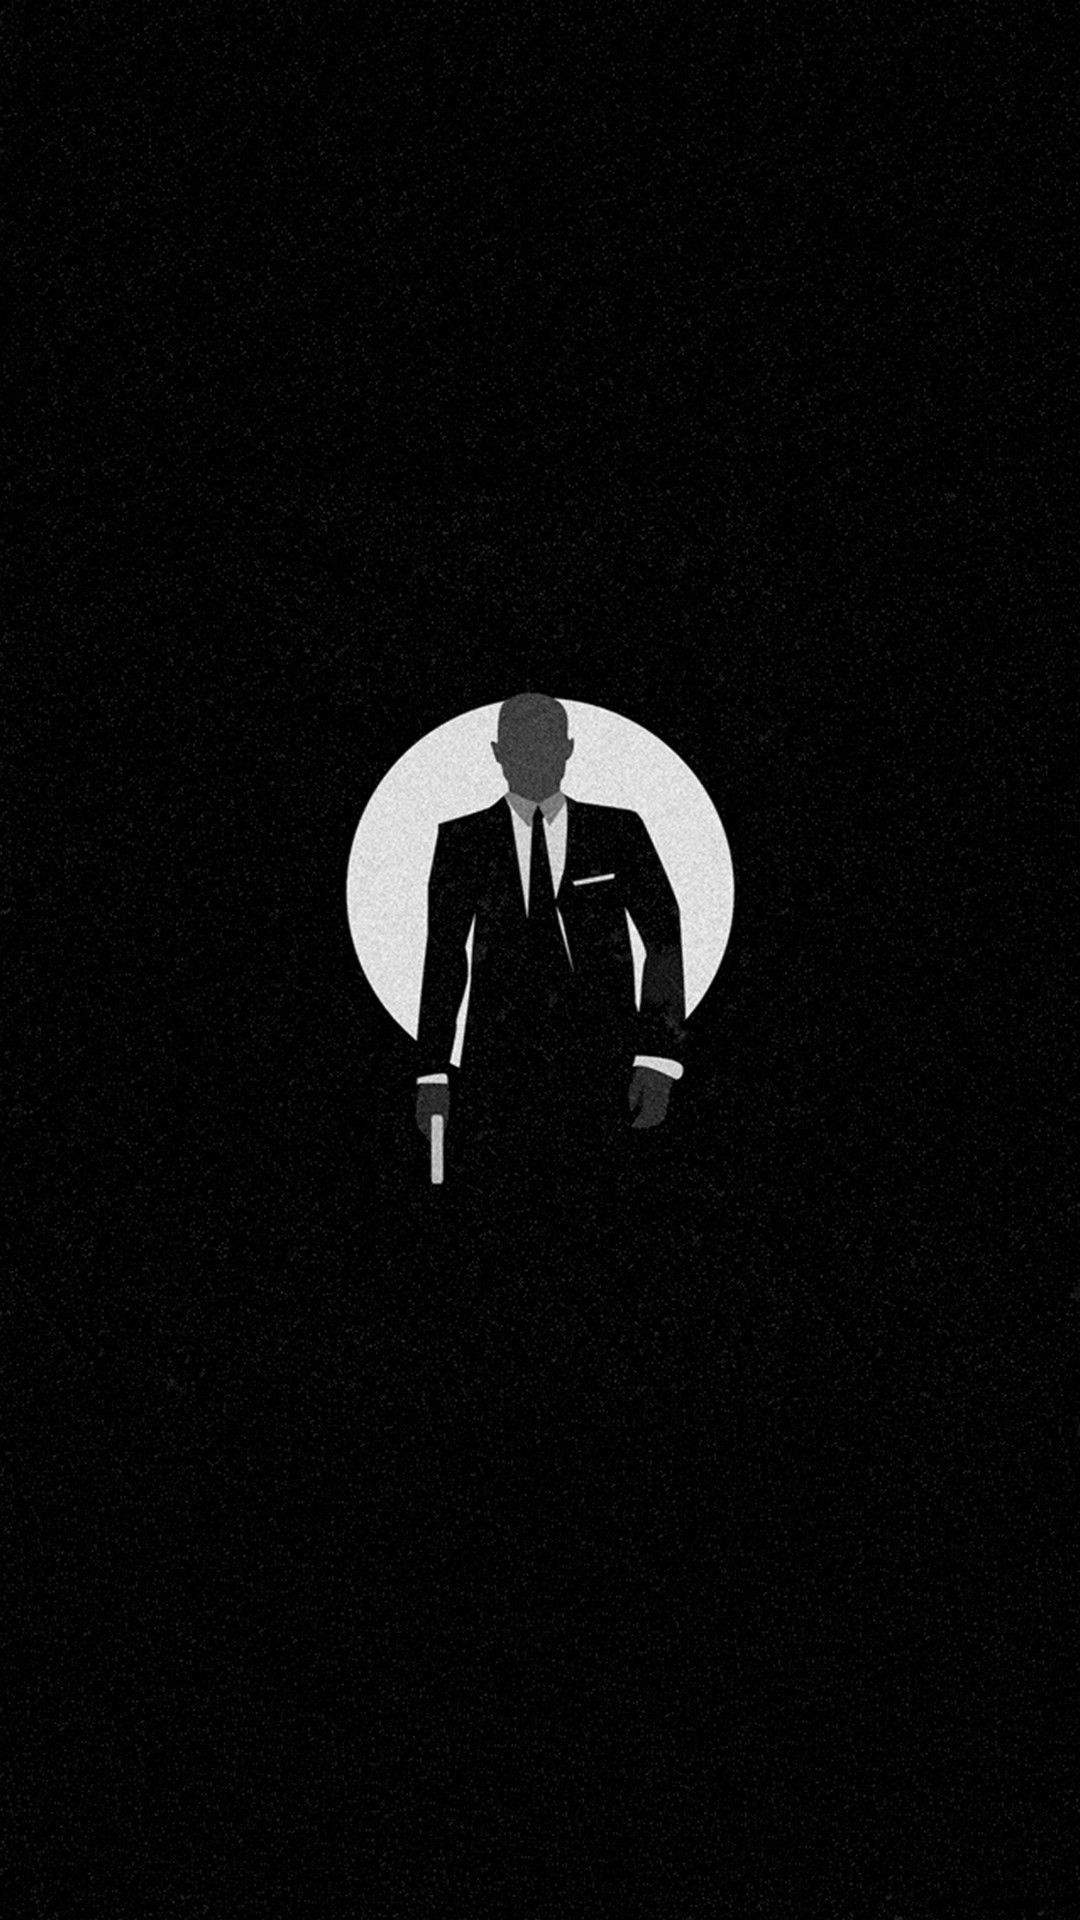 James Bond 007 Wallpaper HD 4K High Resolution 007 Background Image